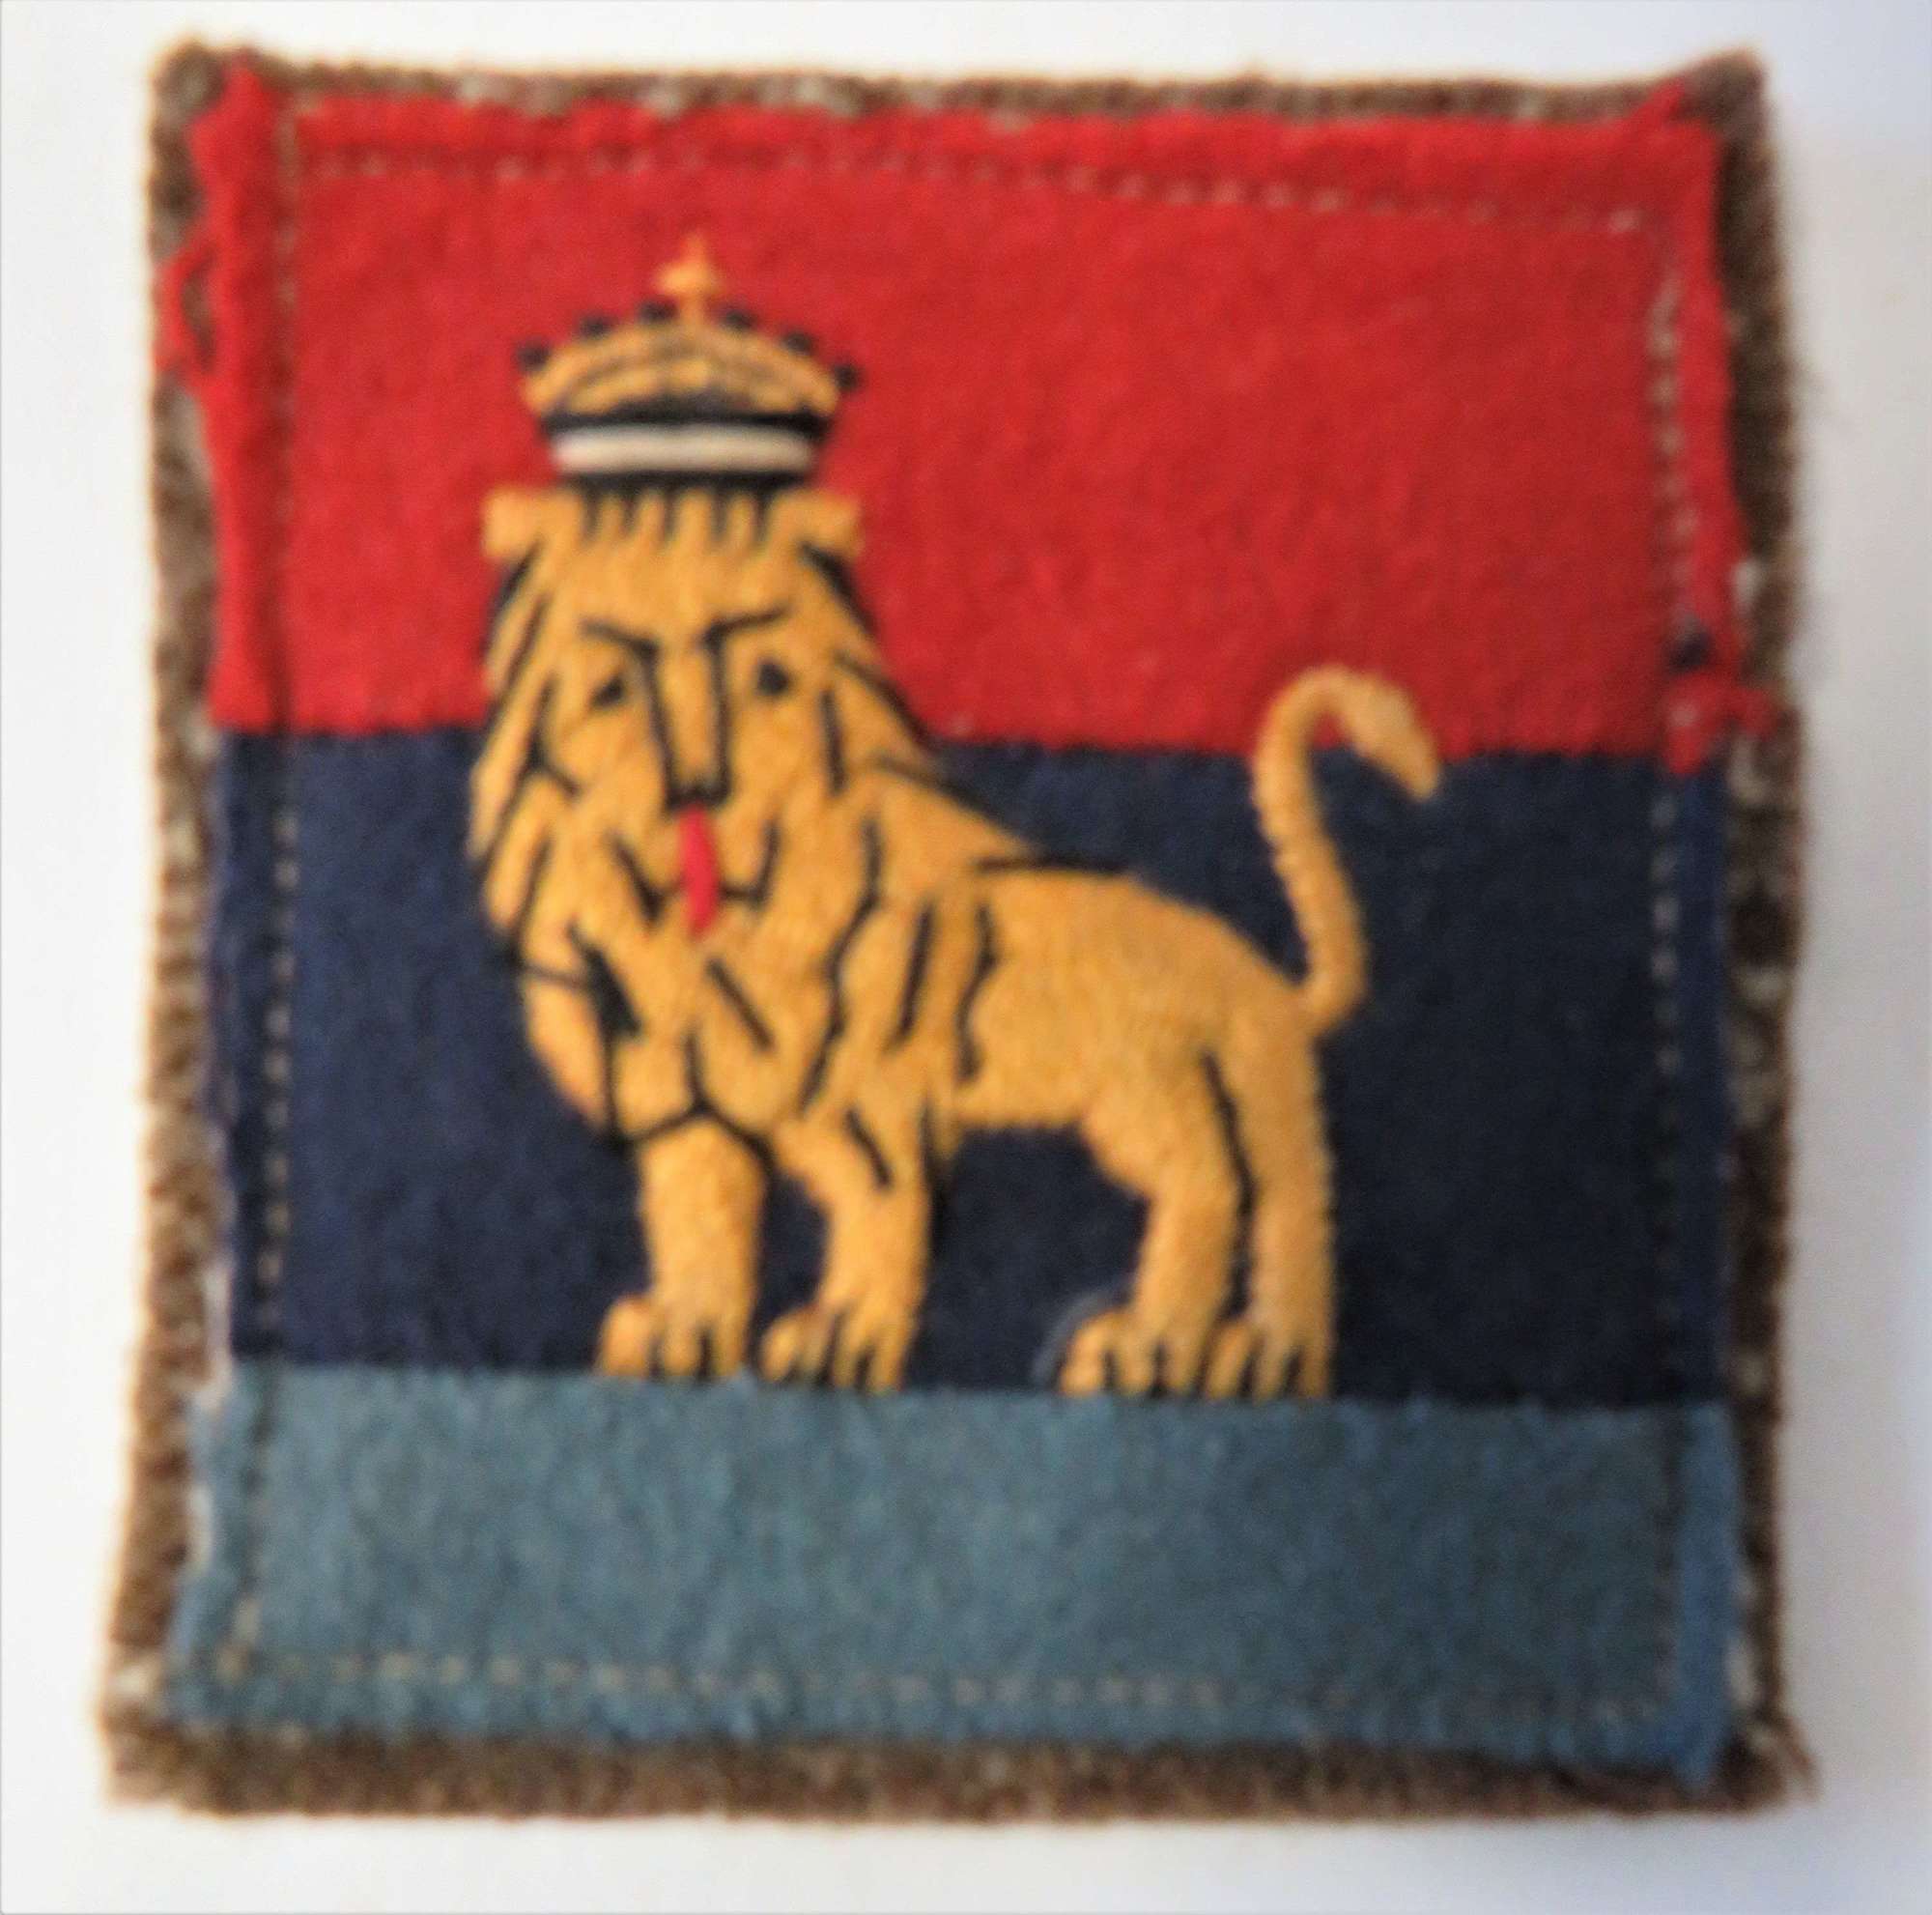 British Troops Egypt Formation Badge